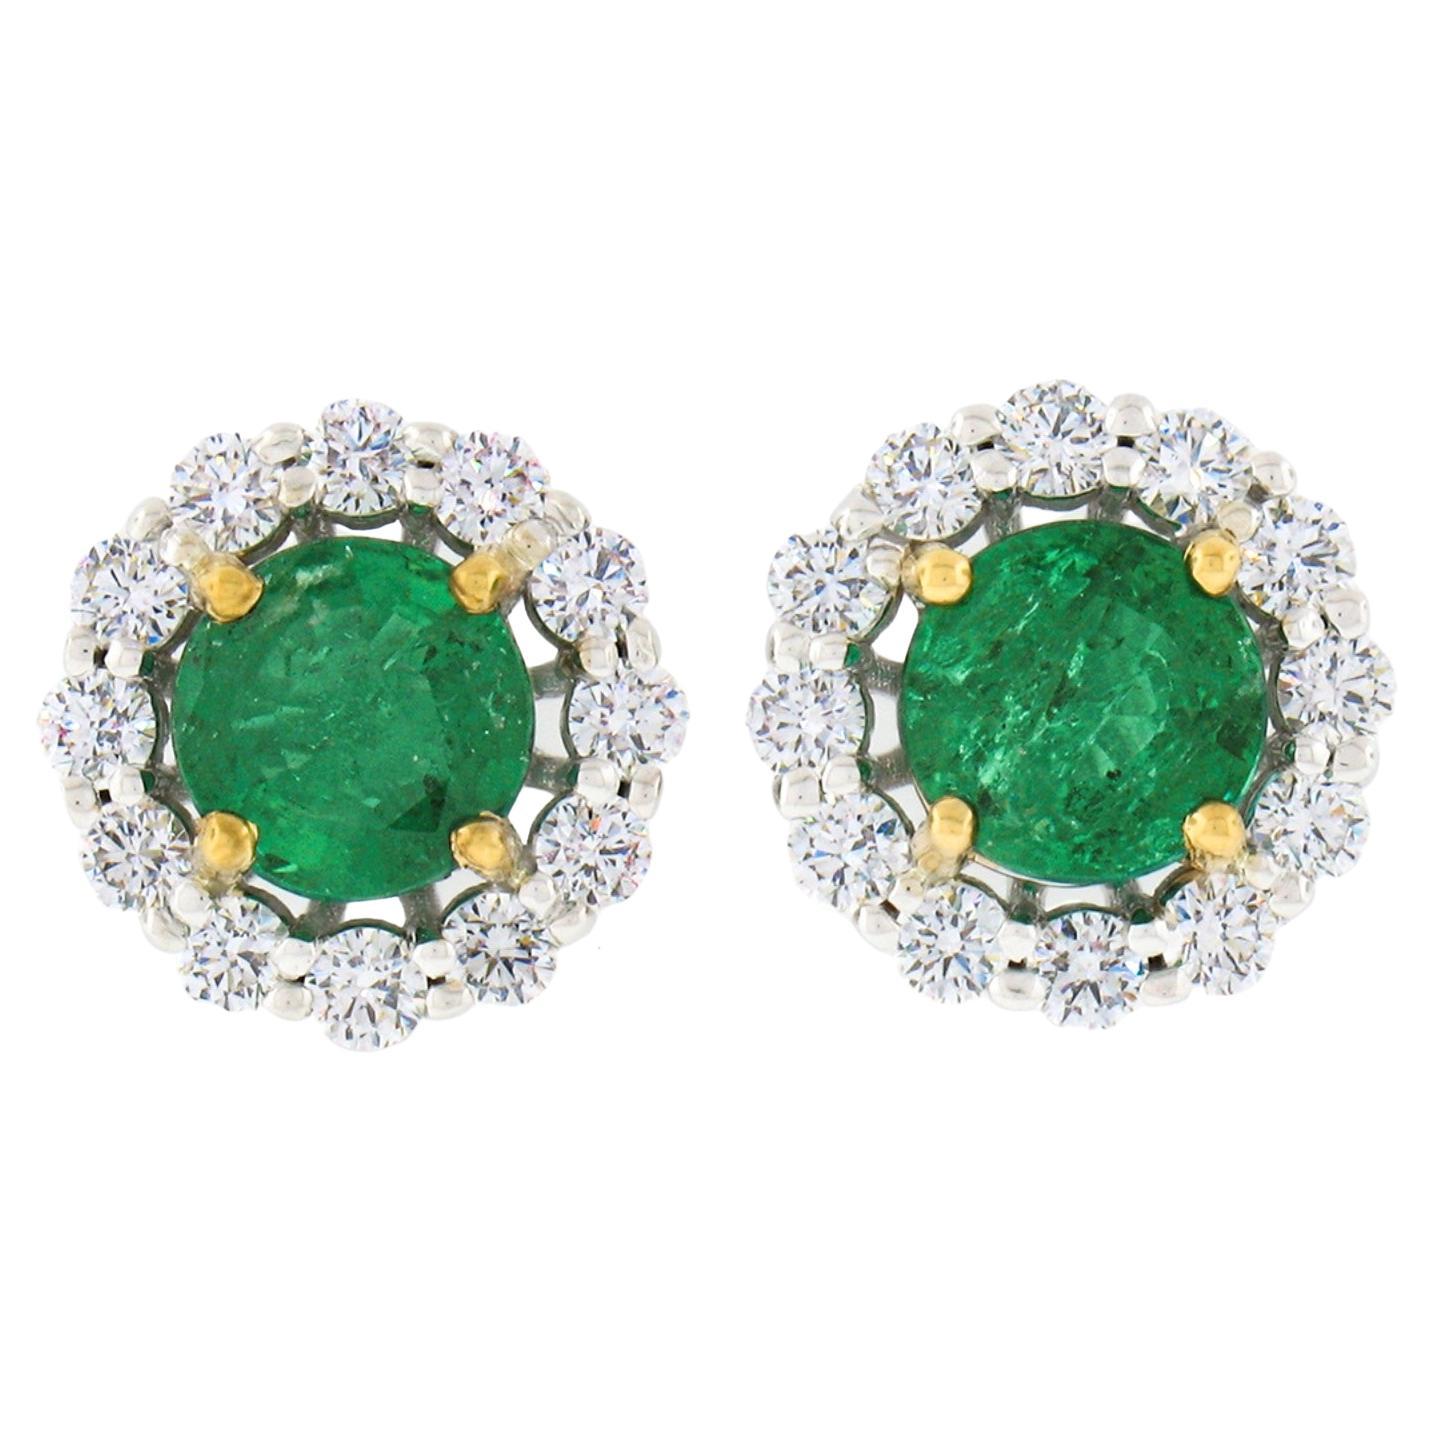 New 18k TT Gold 2.40ctw Round Brilliant Emerald W/ Diamond Halo Stud Earrings For Sale